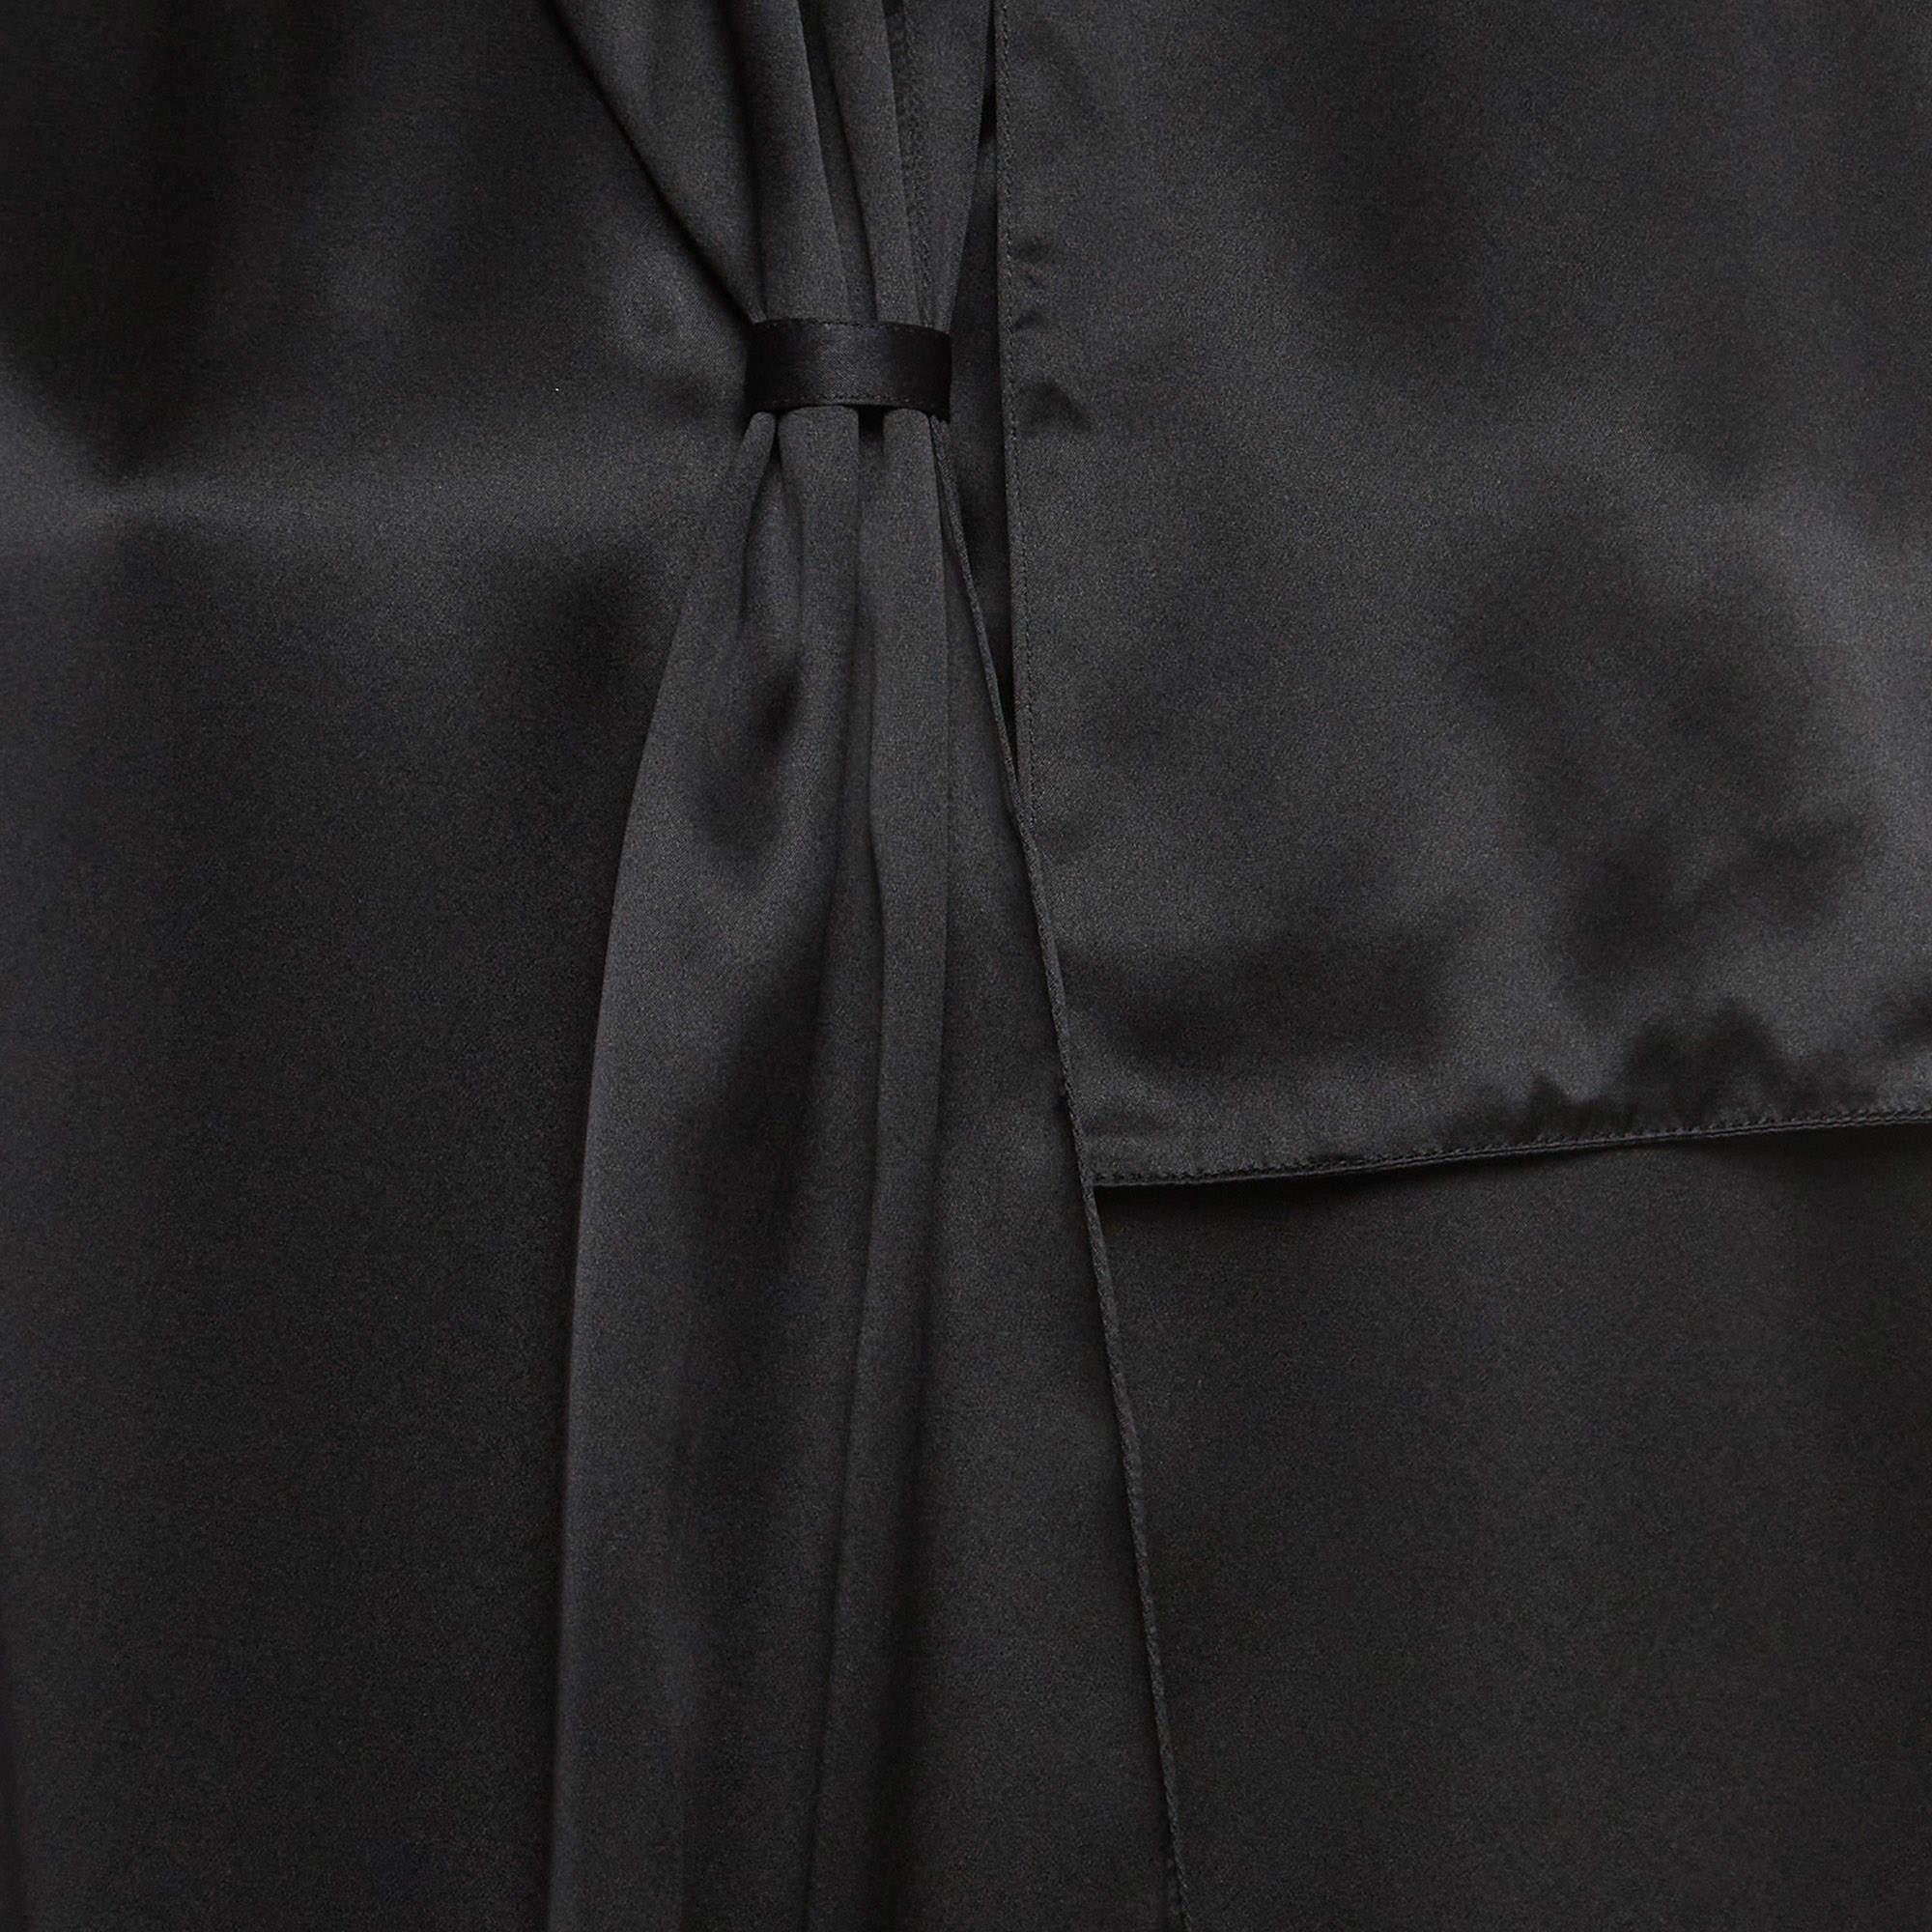 Balenciaga Black Satin Silk Tie-Up Neck Button Front Shirt S In Excellent Condition For Sale In Dubai, Al Qouz 2